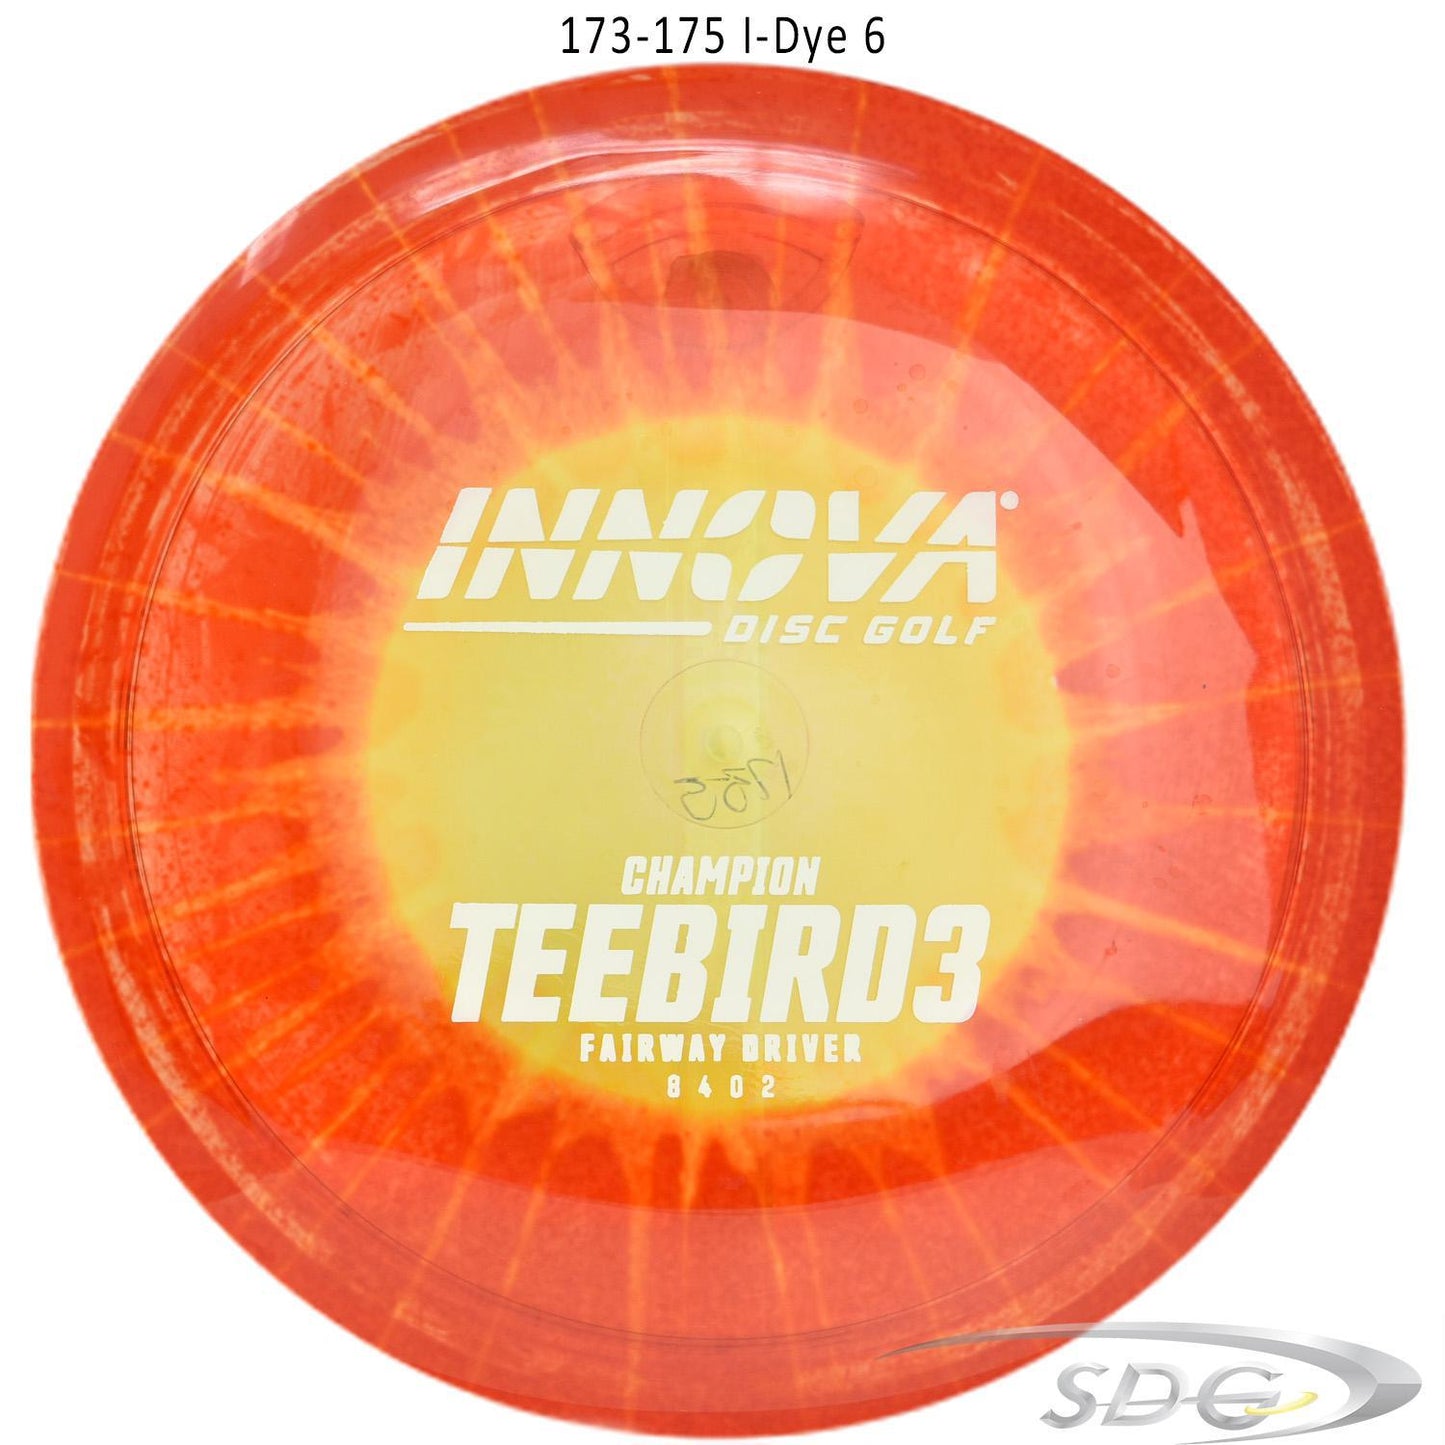 innova-champion-teebird3-i-dye-disc-golf-fairway-driver 173-175 I-Dye 6 